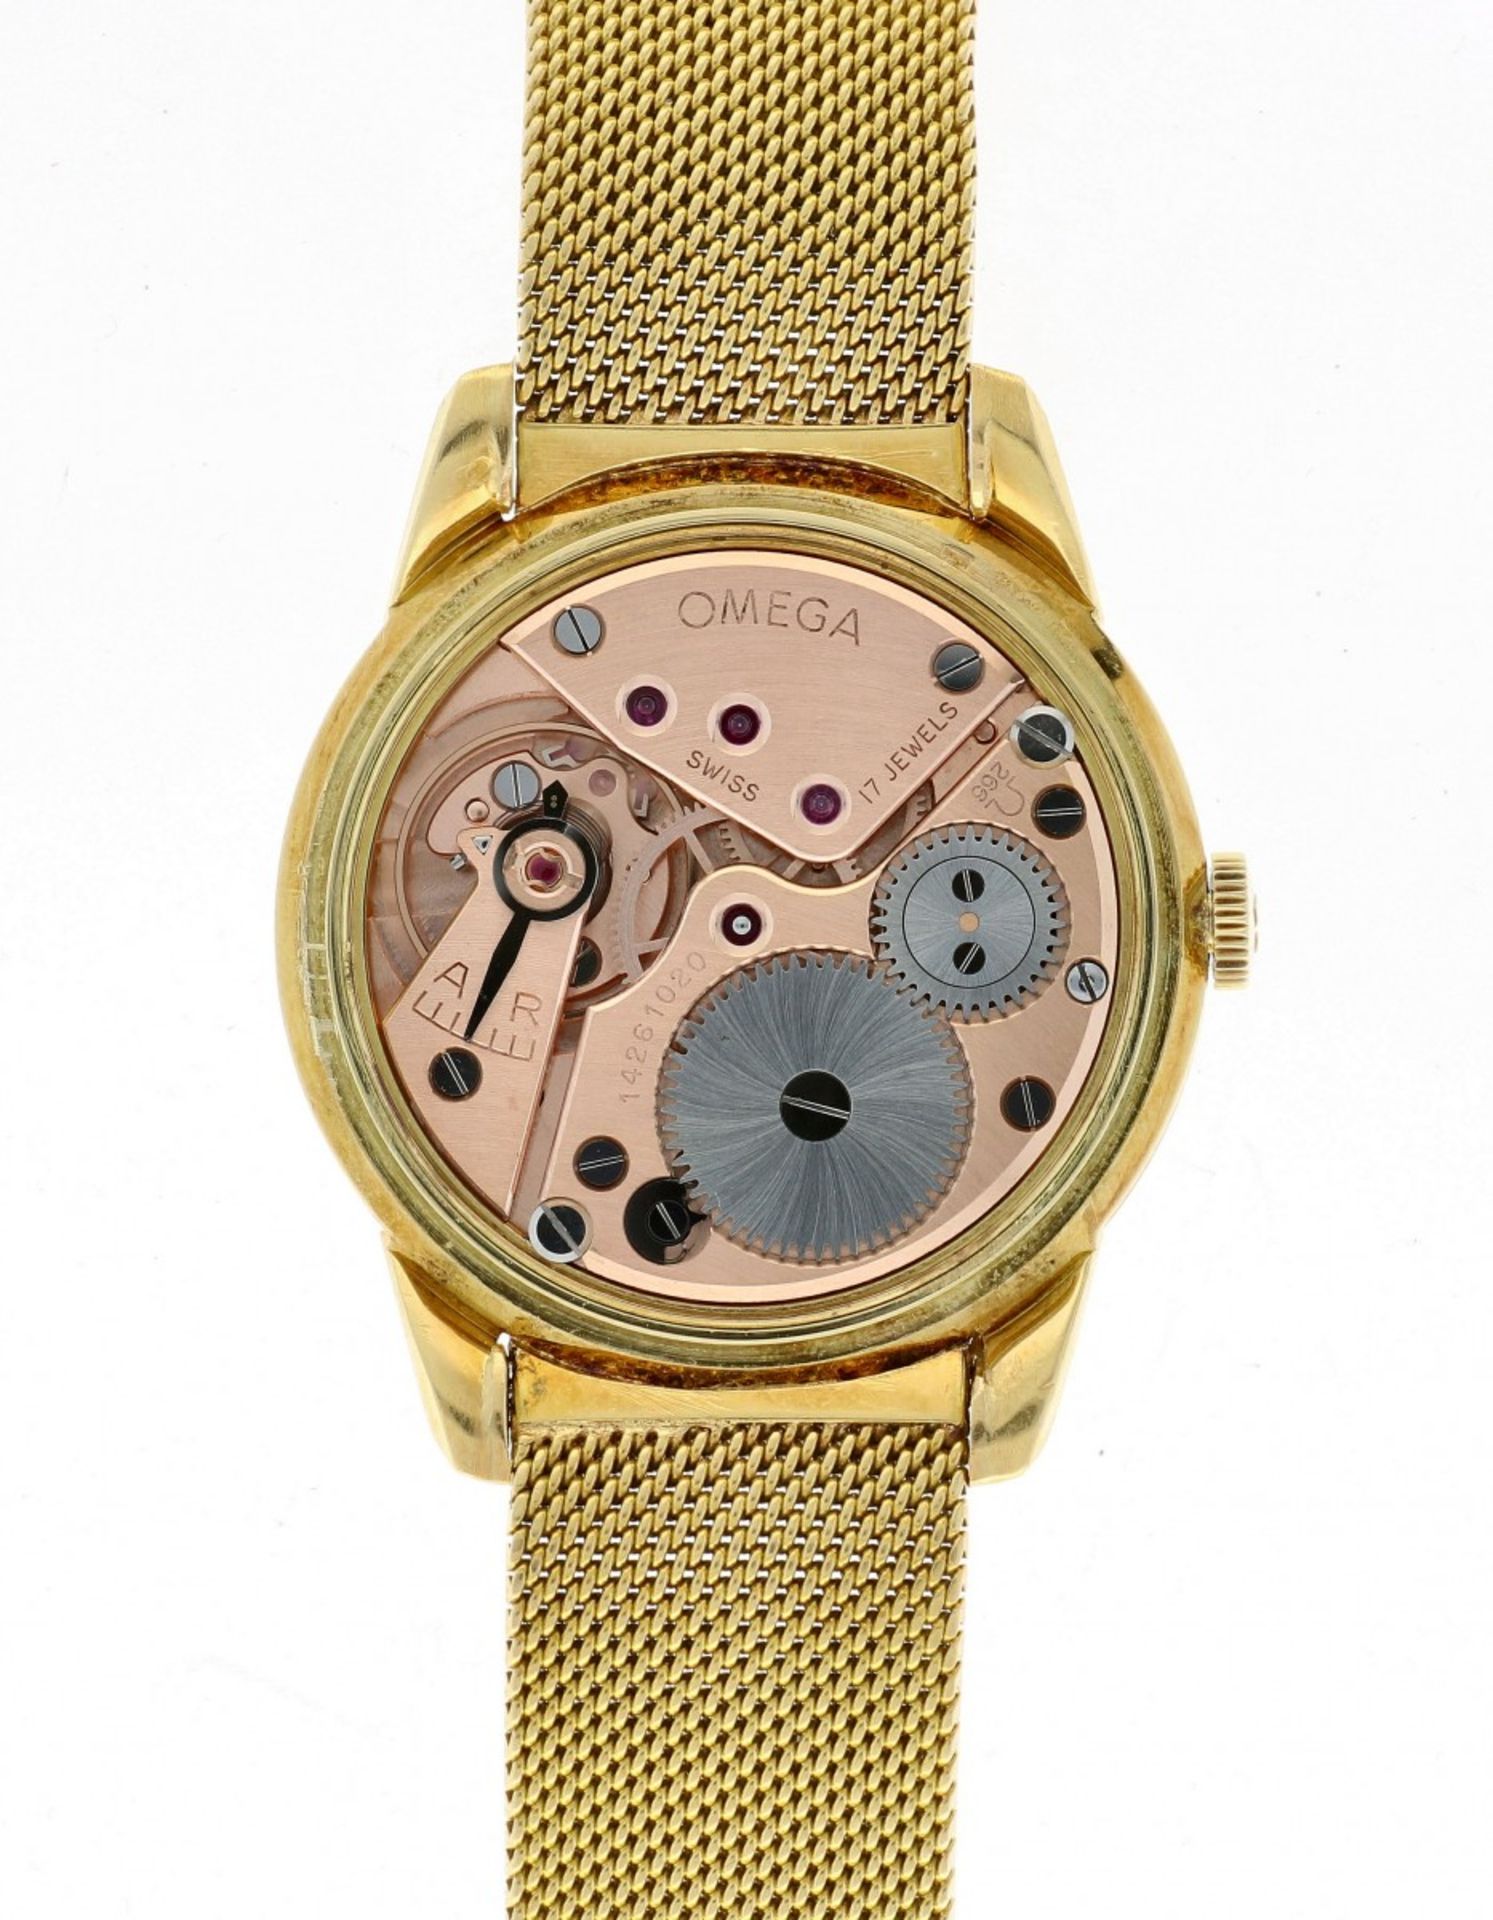 Omega Genéve 2748 - Men's watch - ca. 1954 - Image 6 of 7